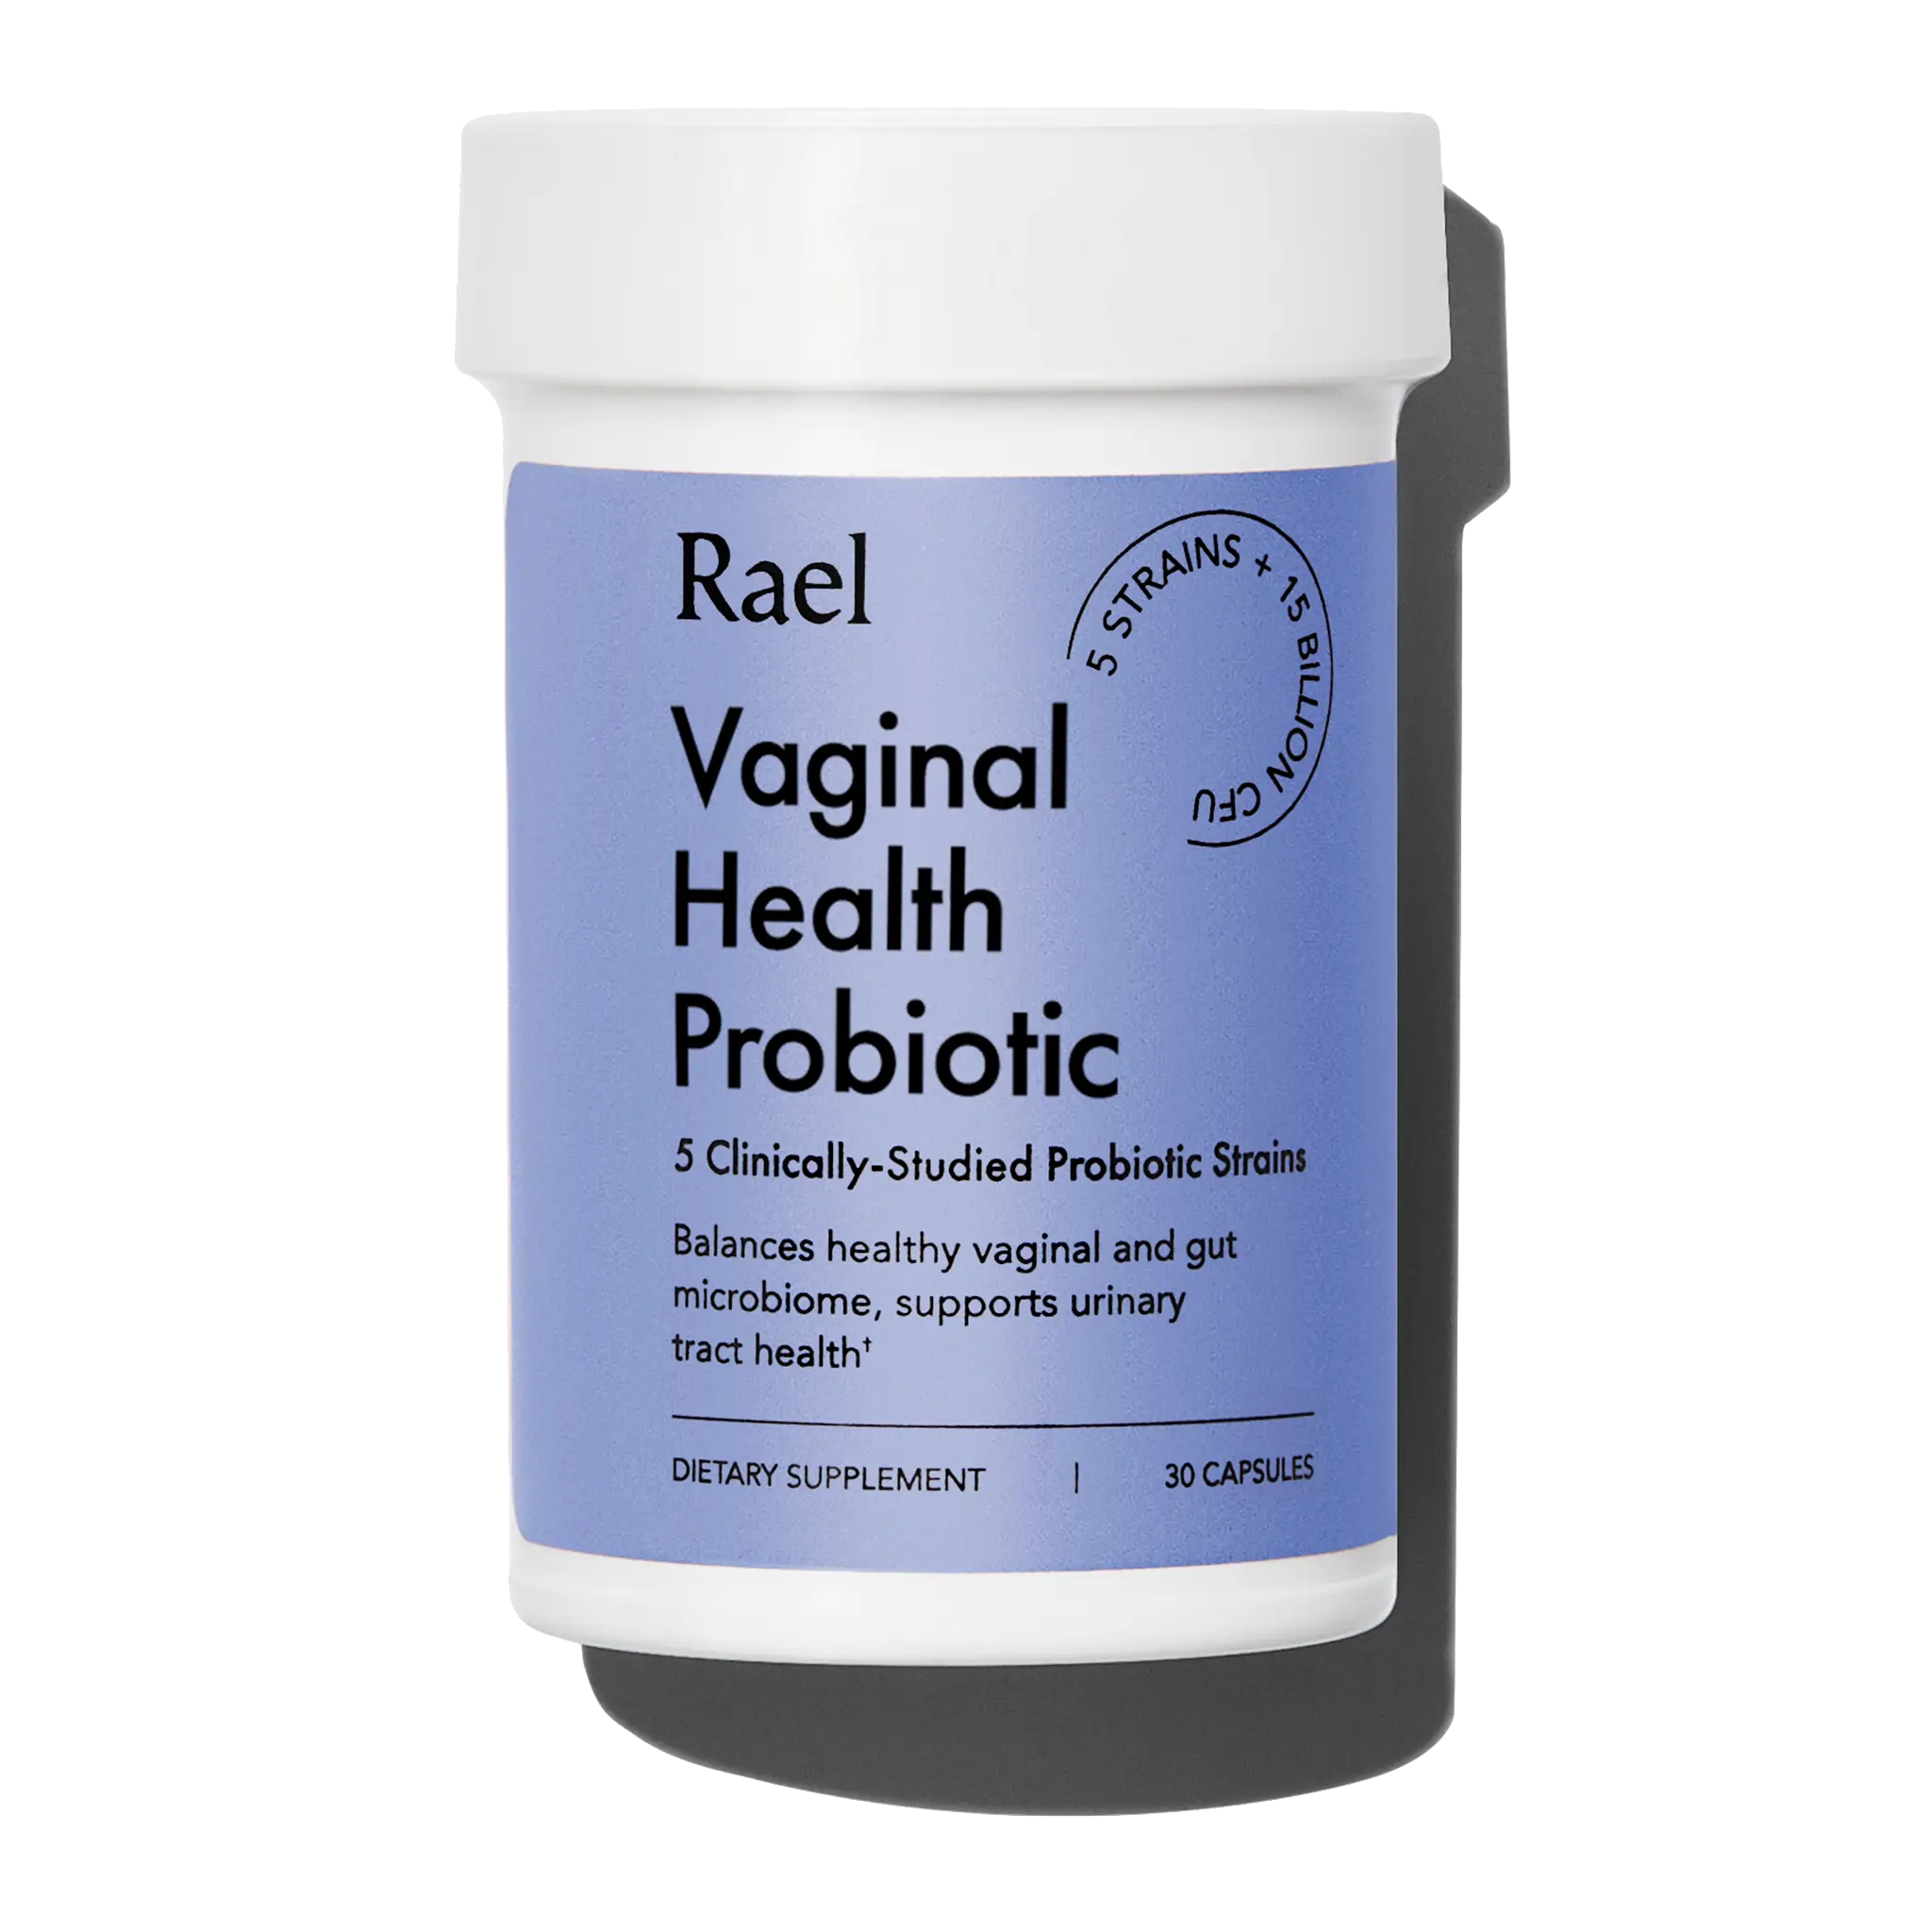 Vaginal Health Probiotic Supplement